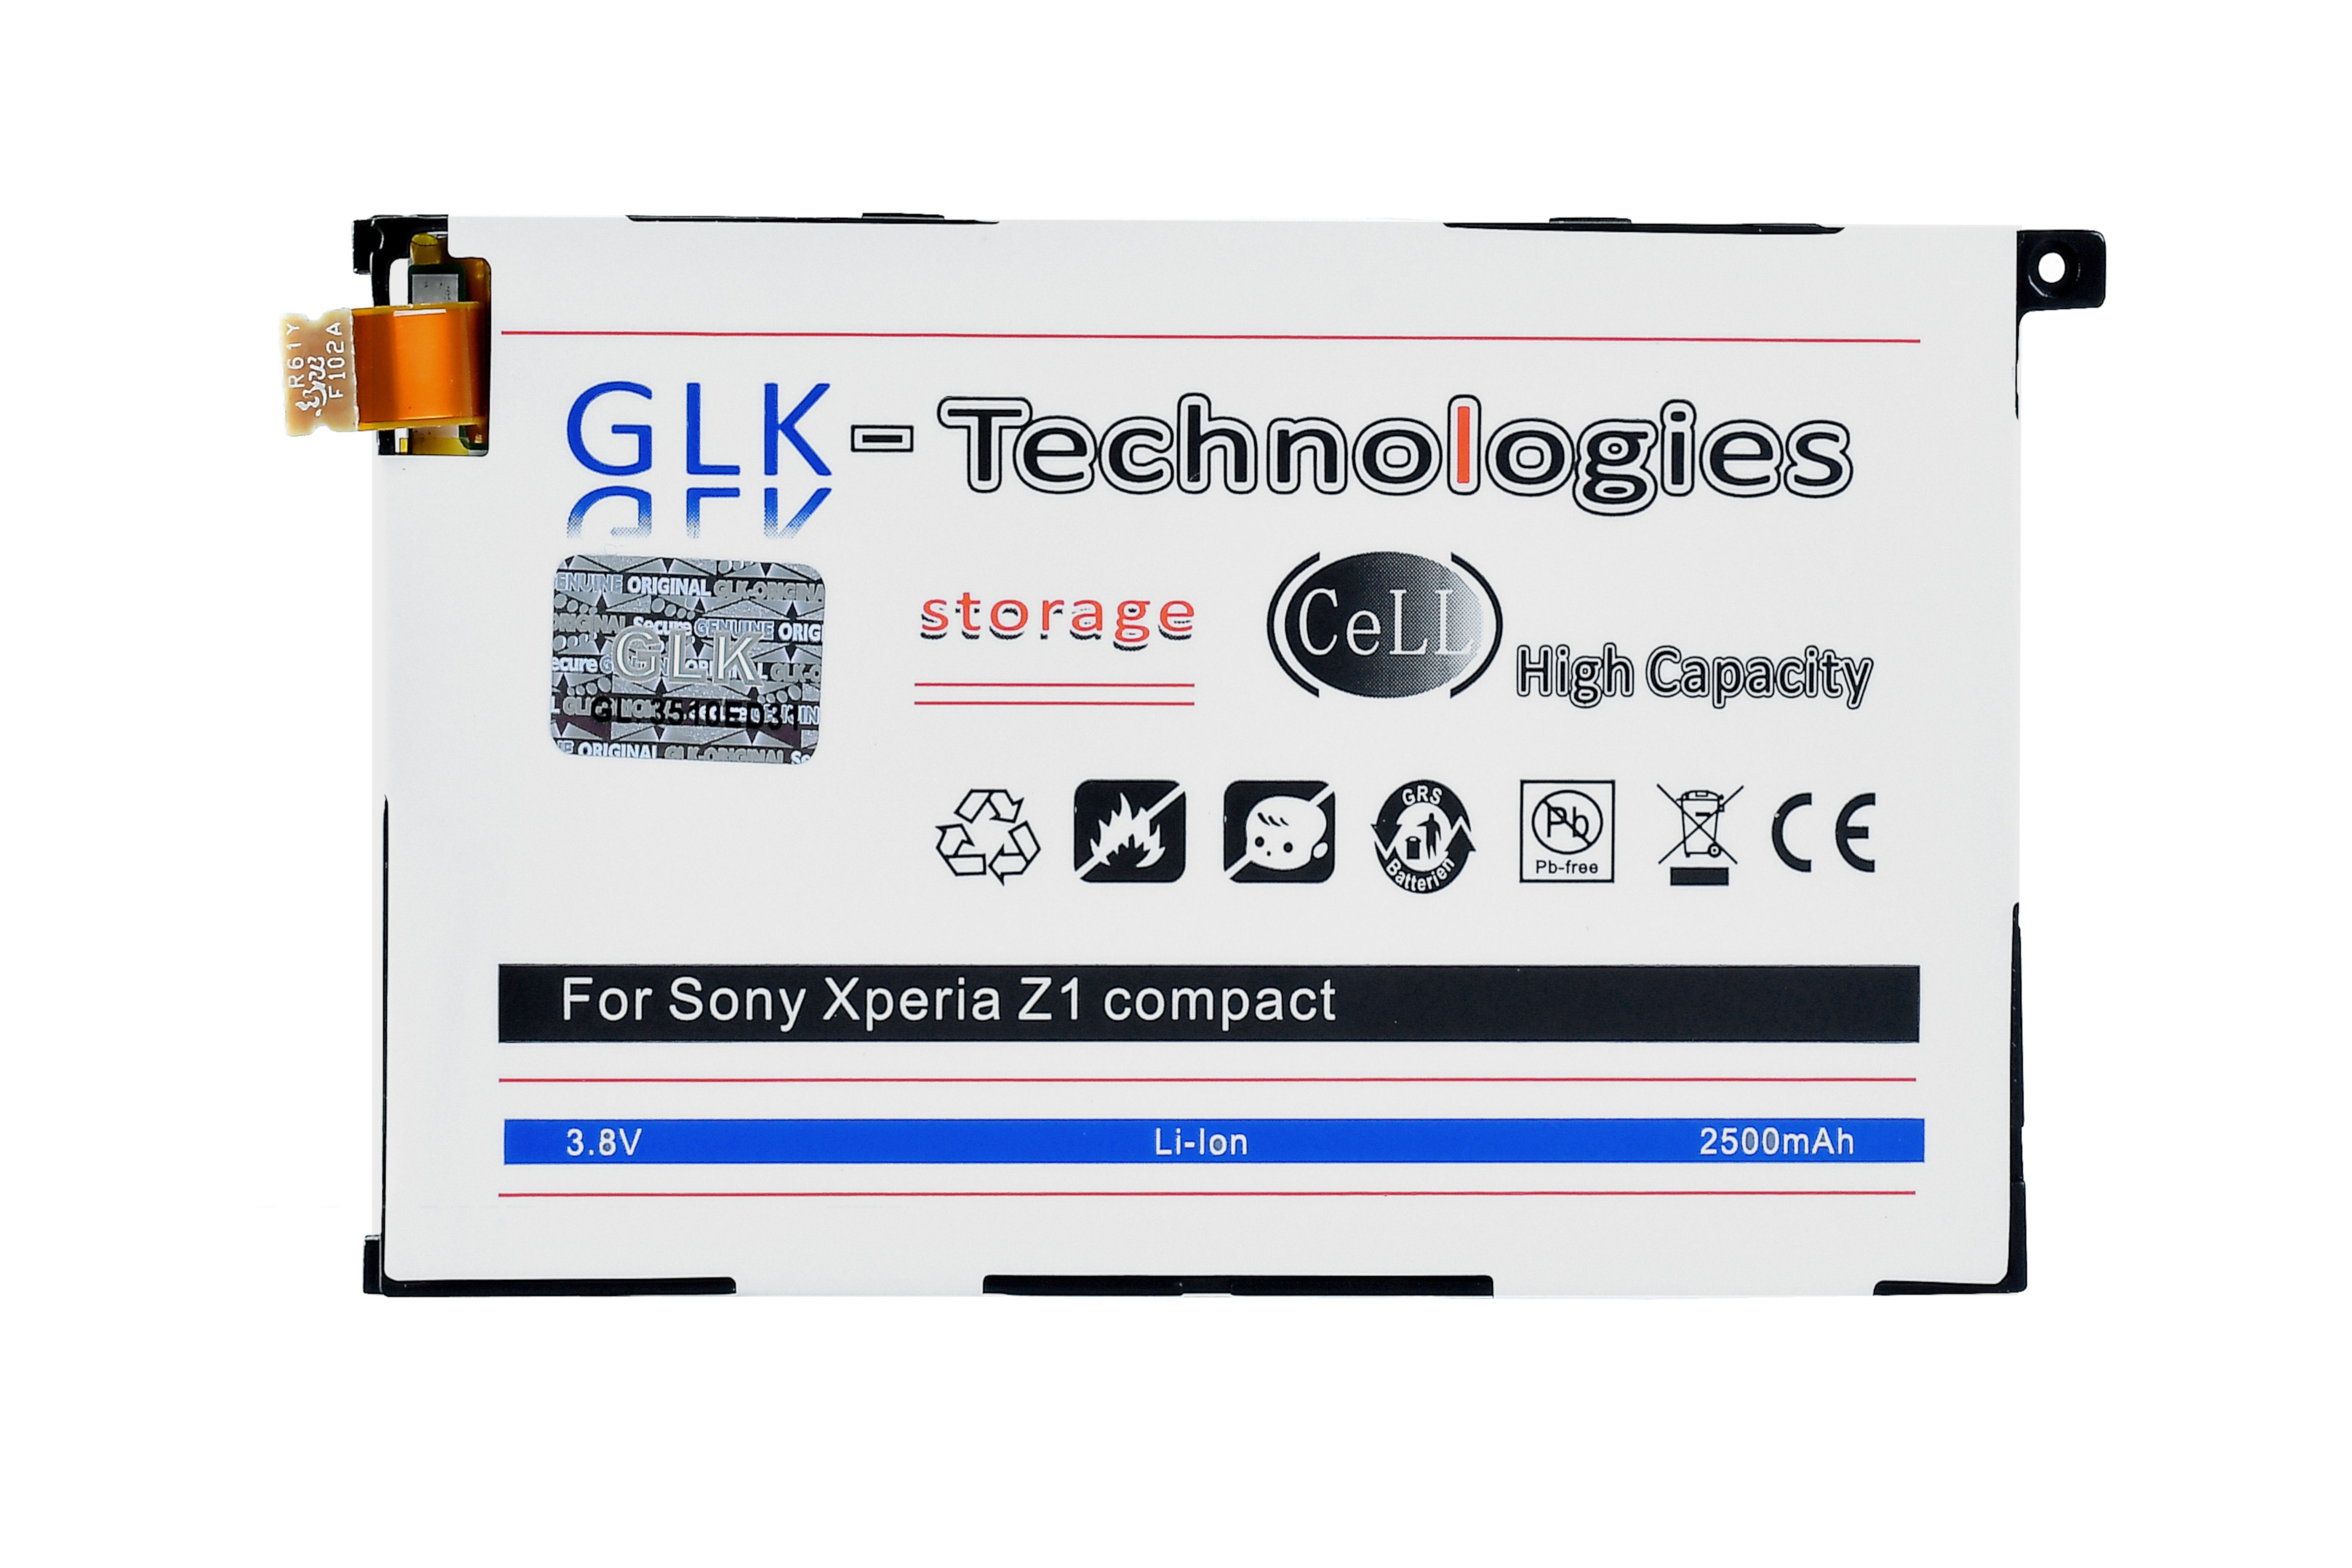 LIS1529ERPC), / (3.8 mit D5503 Smartphone-Akku Z1 NEU / Set 2500 mAh, Compact Kit GLK-Technologies Xperia Original (ersetzt 2500 accu, High inkl. Battery, Power Sony V) mAh Werkzeug GLK-Technologies Ersatzakku kompatibel